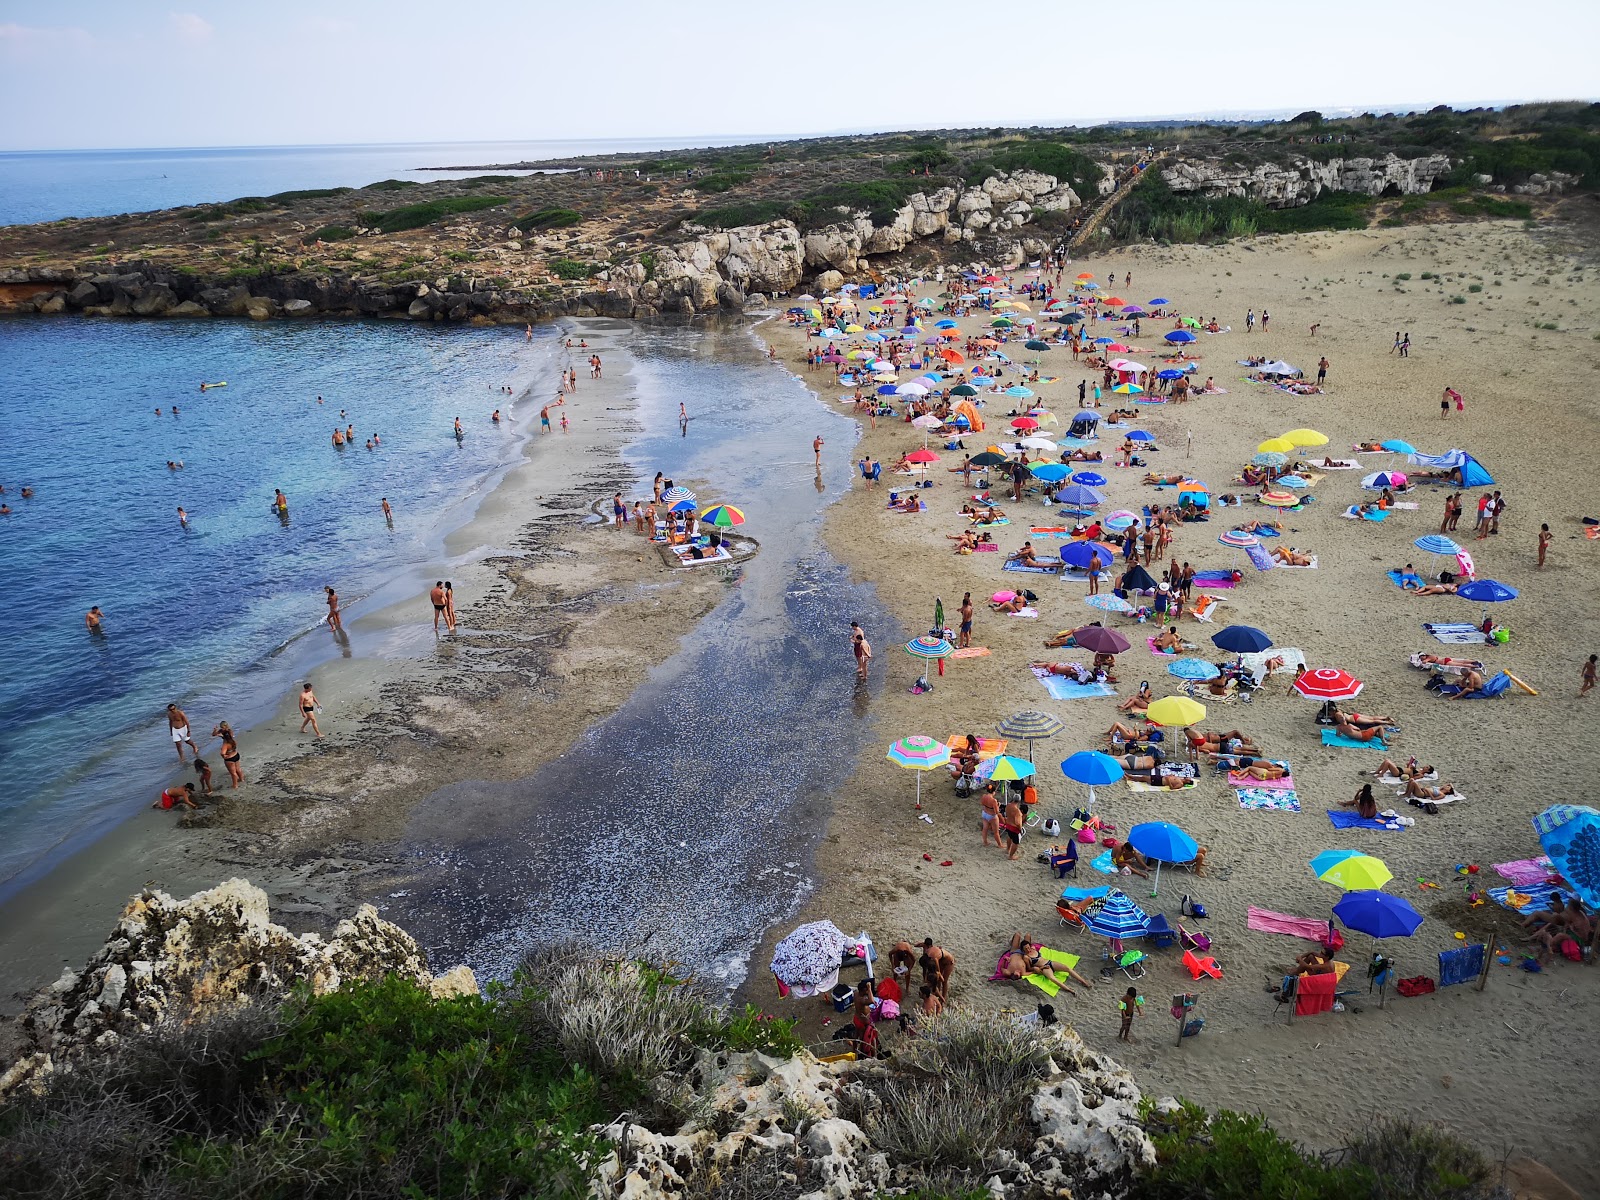 Photo of Spiaggia di Calamosche located in natural area